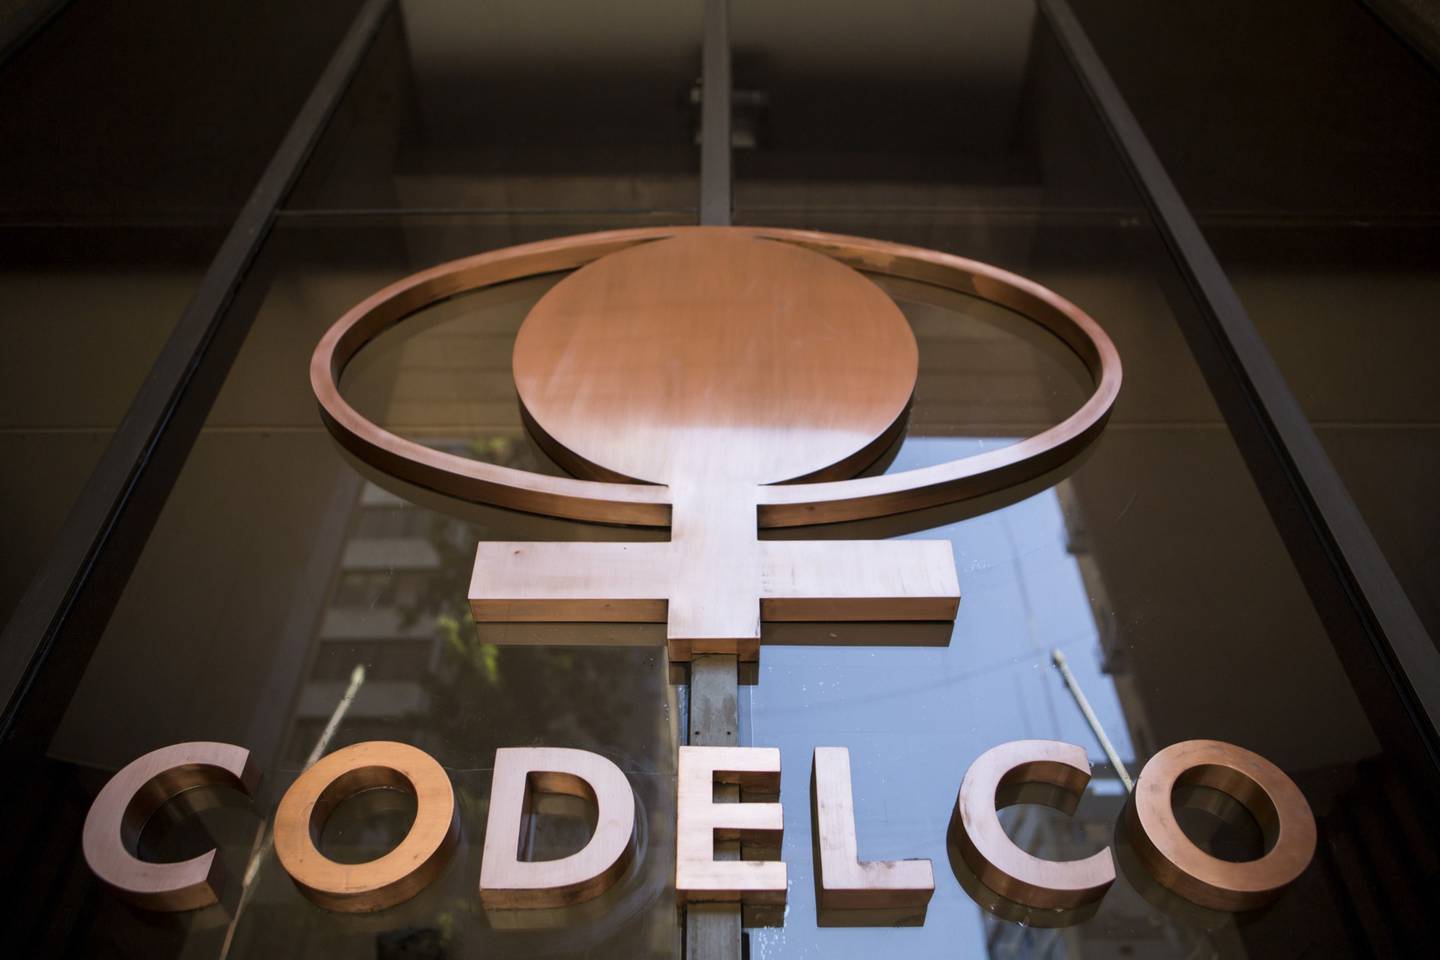 La fachada de Codelco. Fotógrafo: Ronald Patrick/Bloomberg